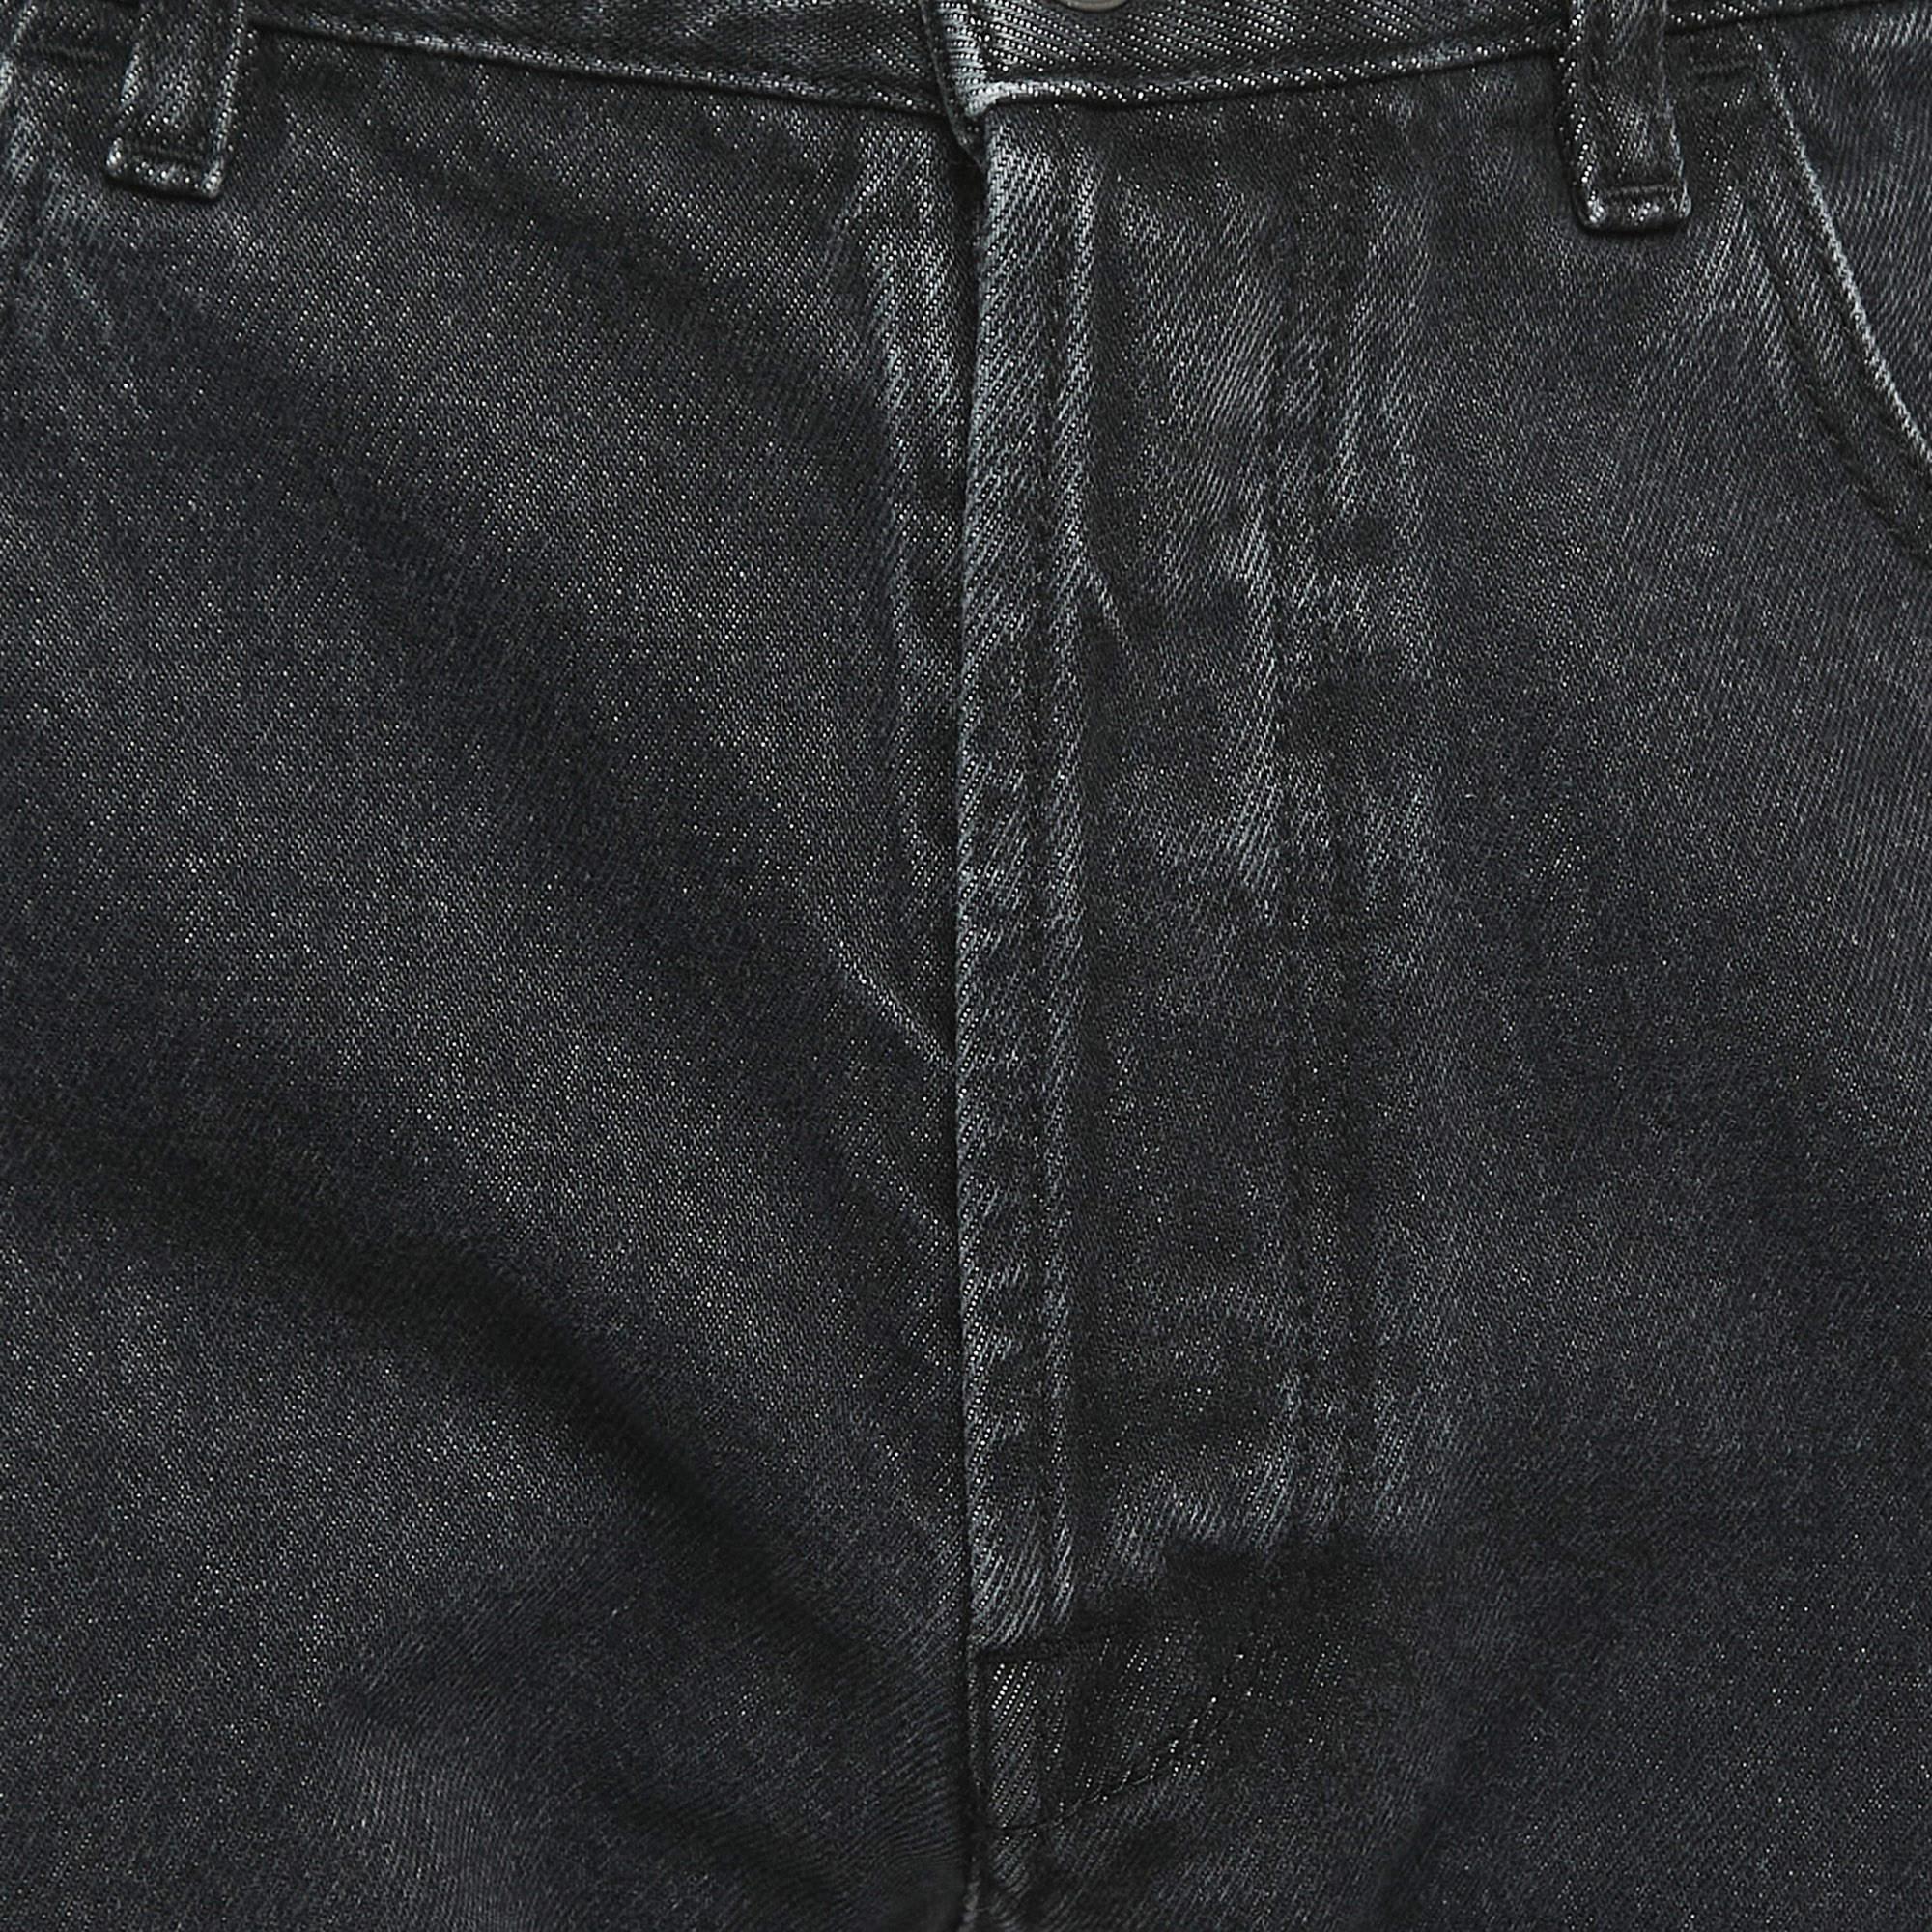 Valentino Grey V Logo Print Washed Denim Straight Fit Jeans L Waist 34